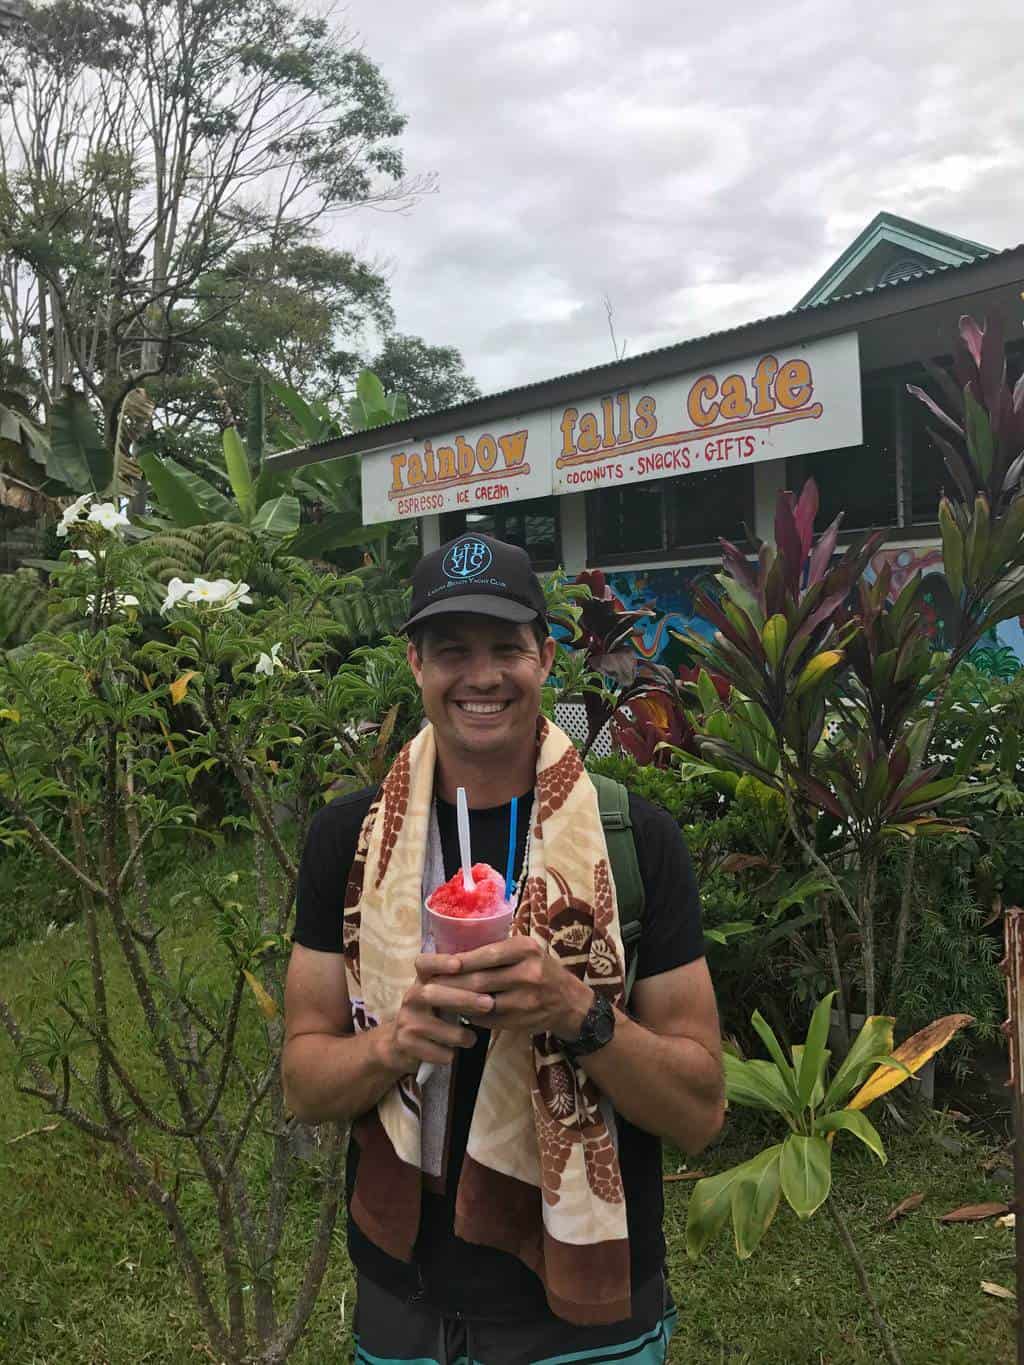 best hawaii hikes, rainbow falls, things to do in hawaii, where to hike in hawaii, best island hikes, hawaii, rainbow falls directions